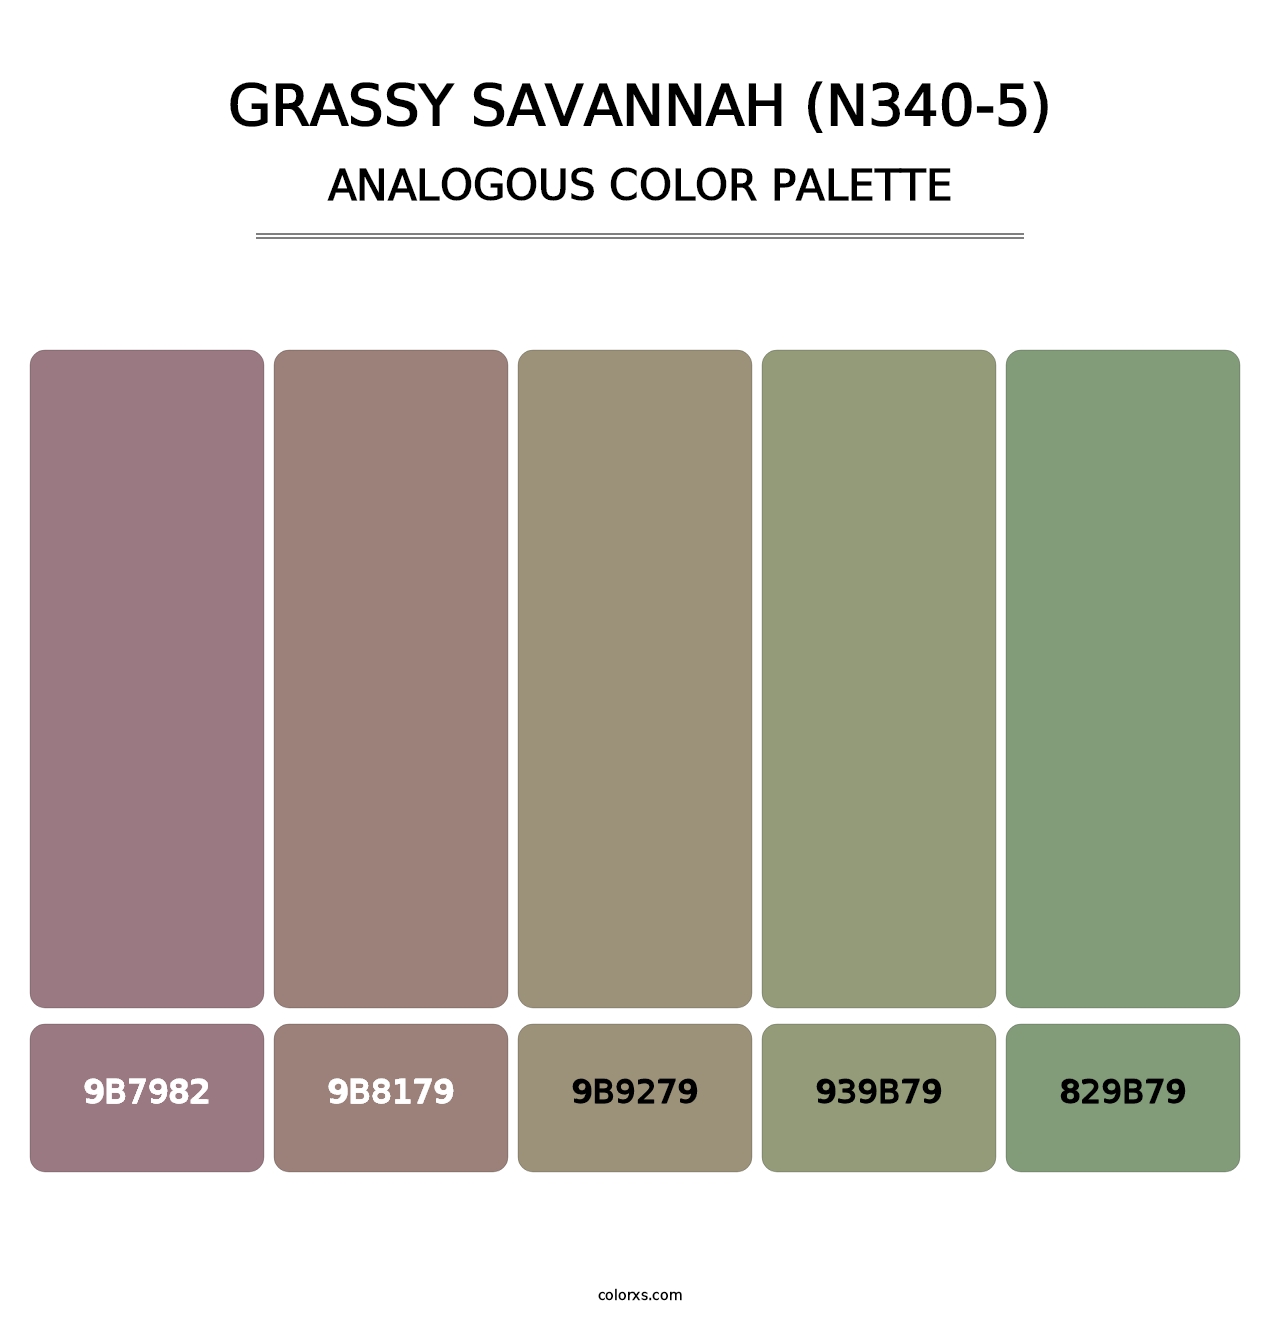 Grassy Savannah (N340-5) - Analogous Color Palette